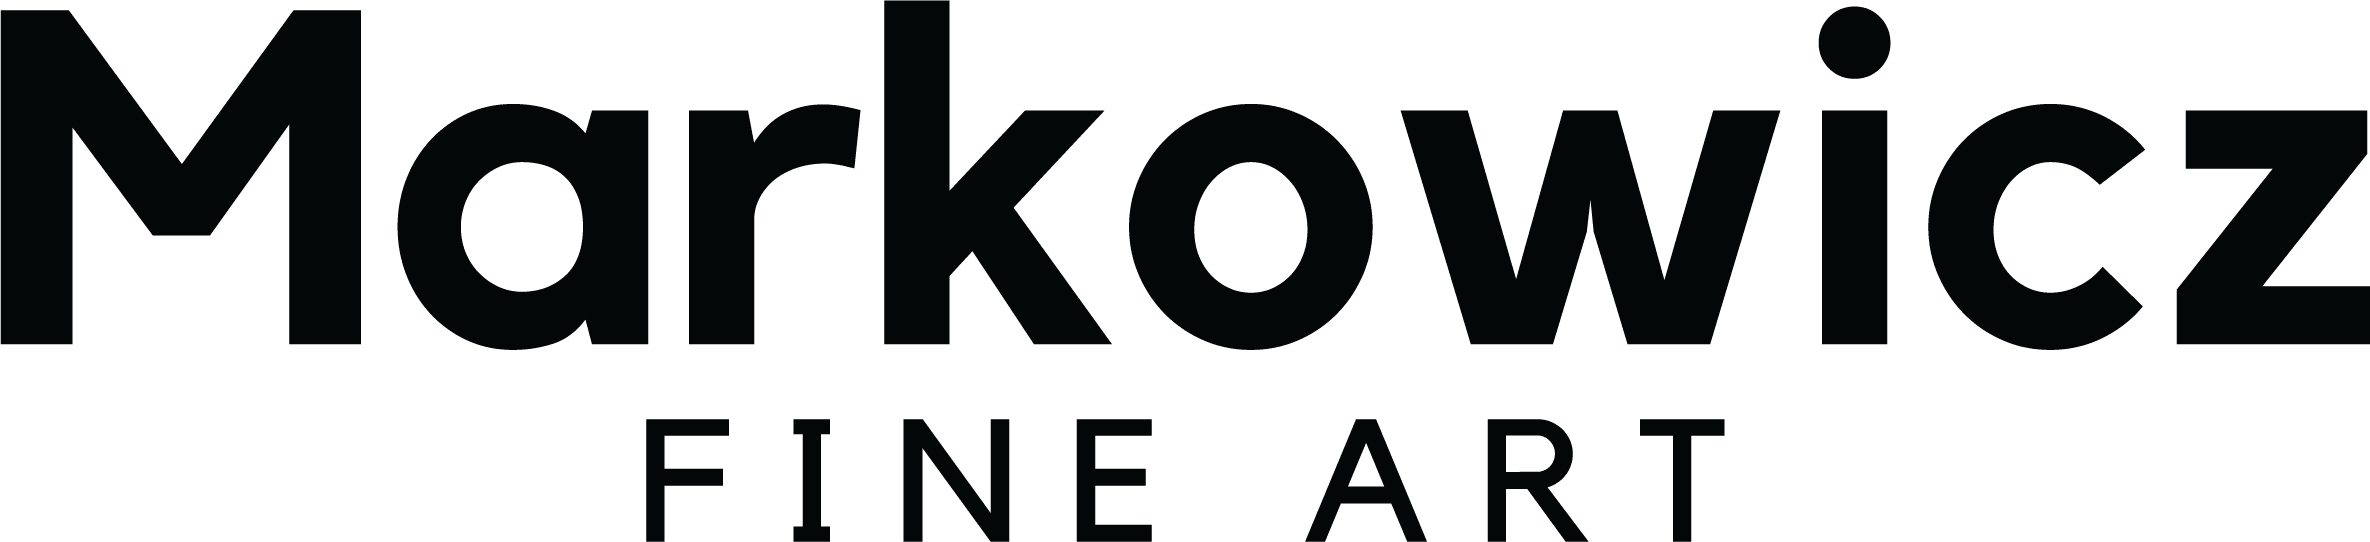 Markowicz Fine Art company logo